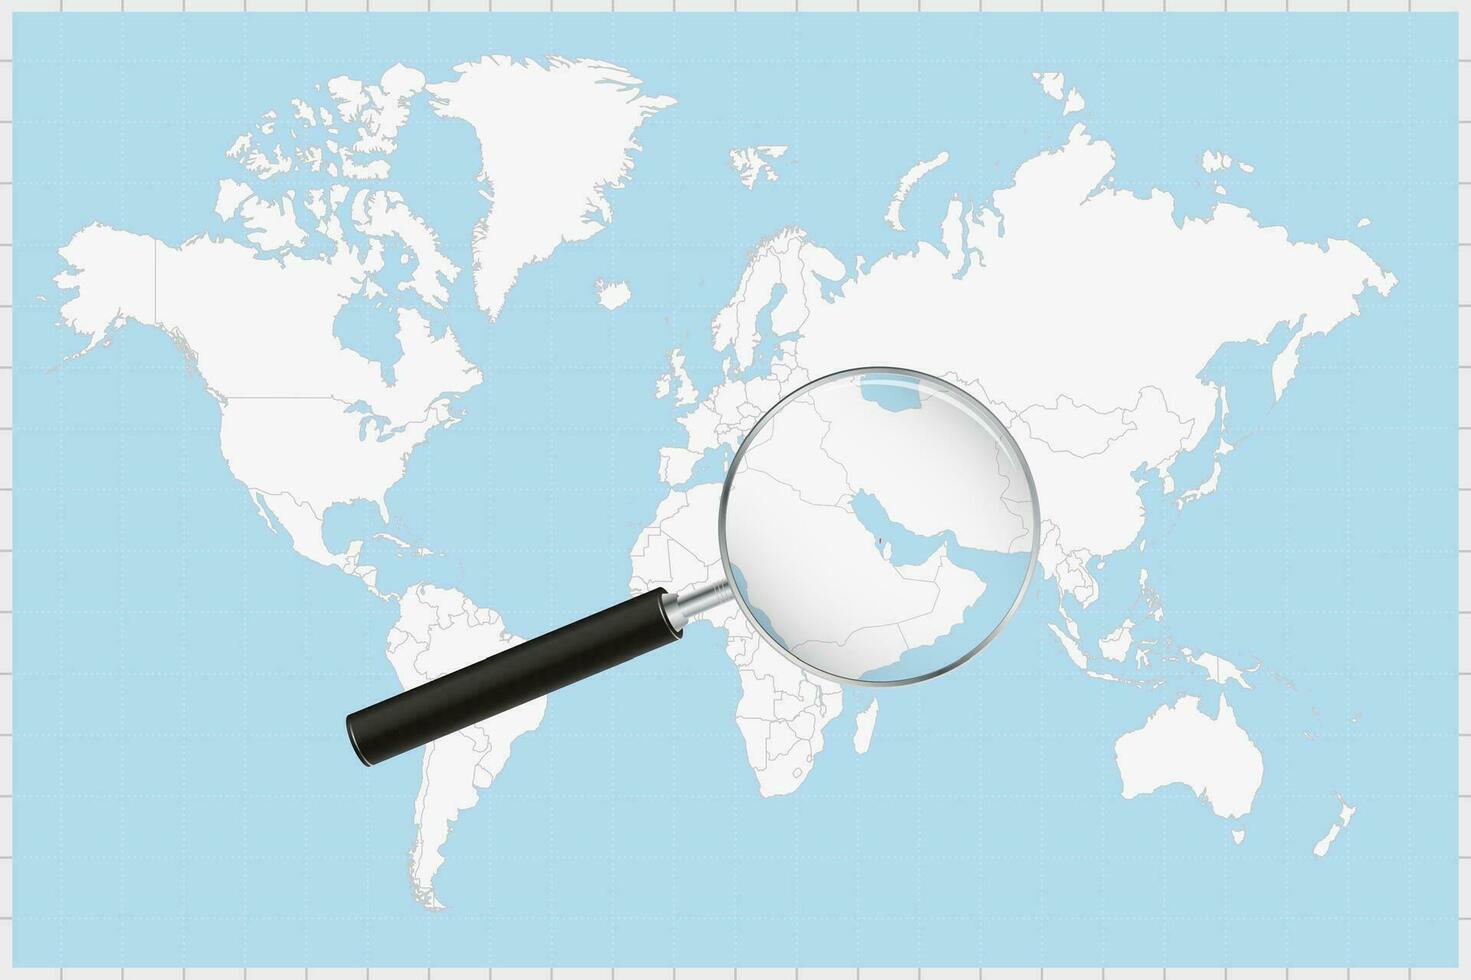 aumentador vaso demostración un mapa de bahrein en un mundo mapa. vector